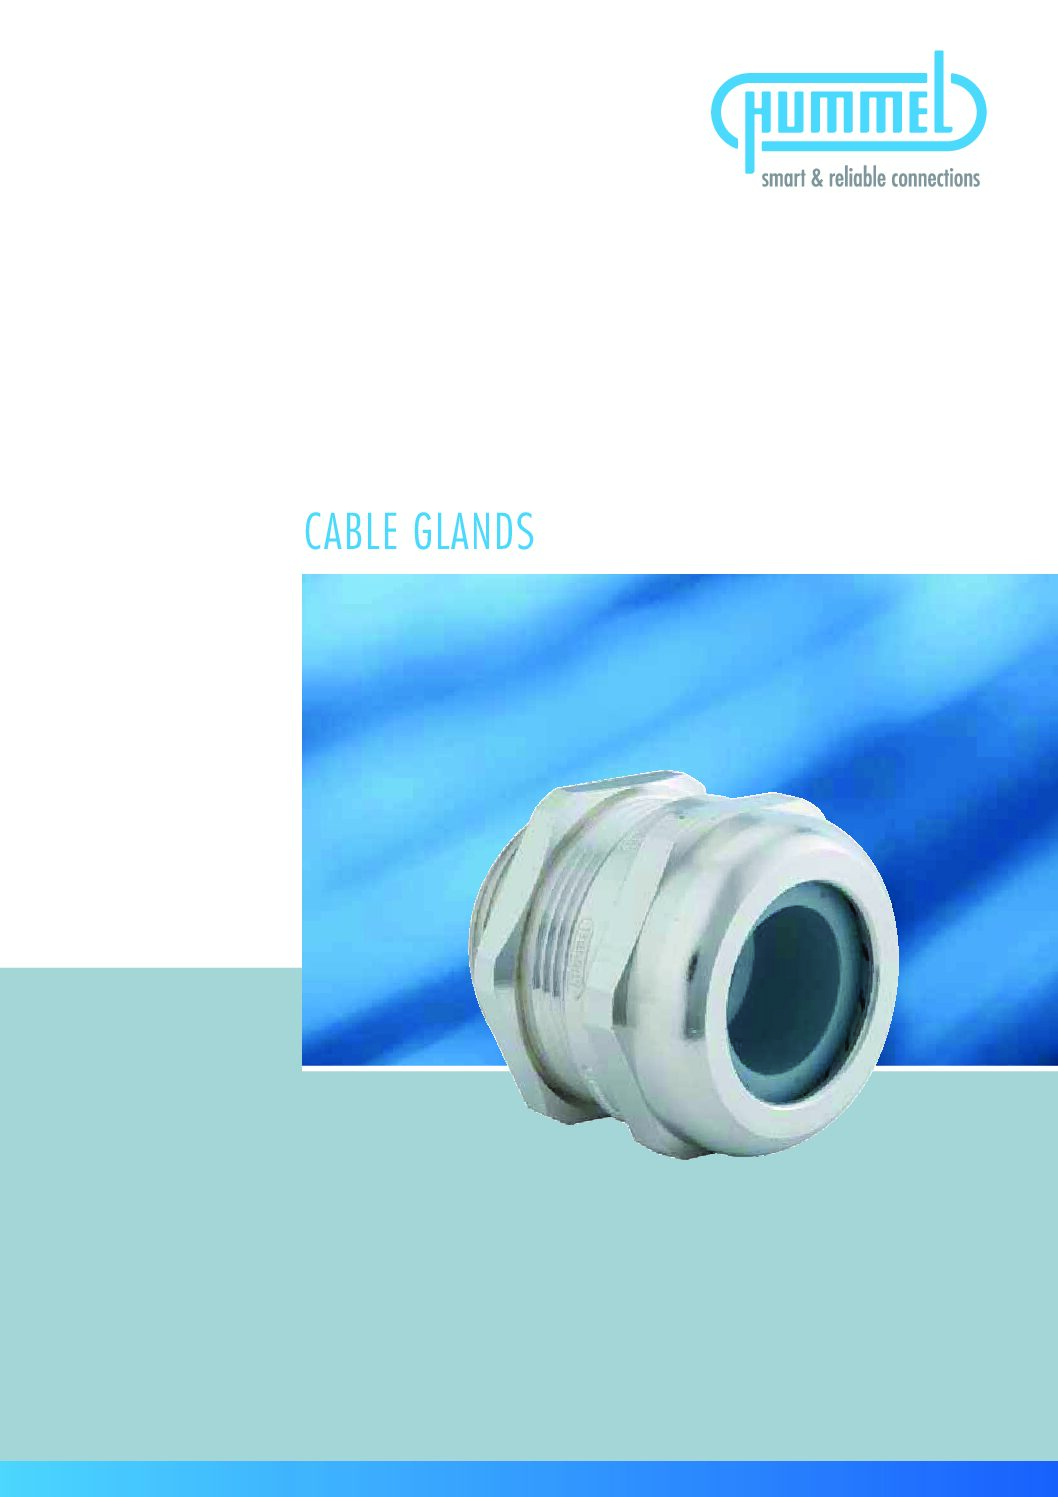 Hummel Cable Glands Brochure